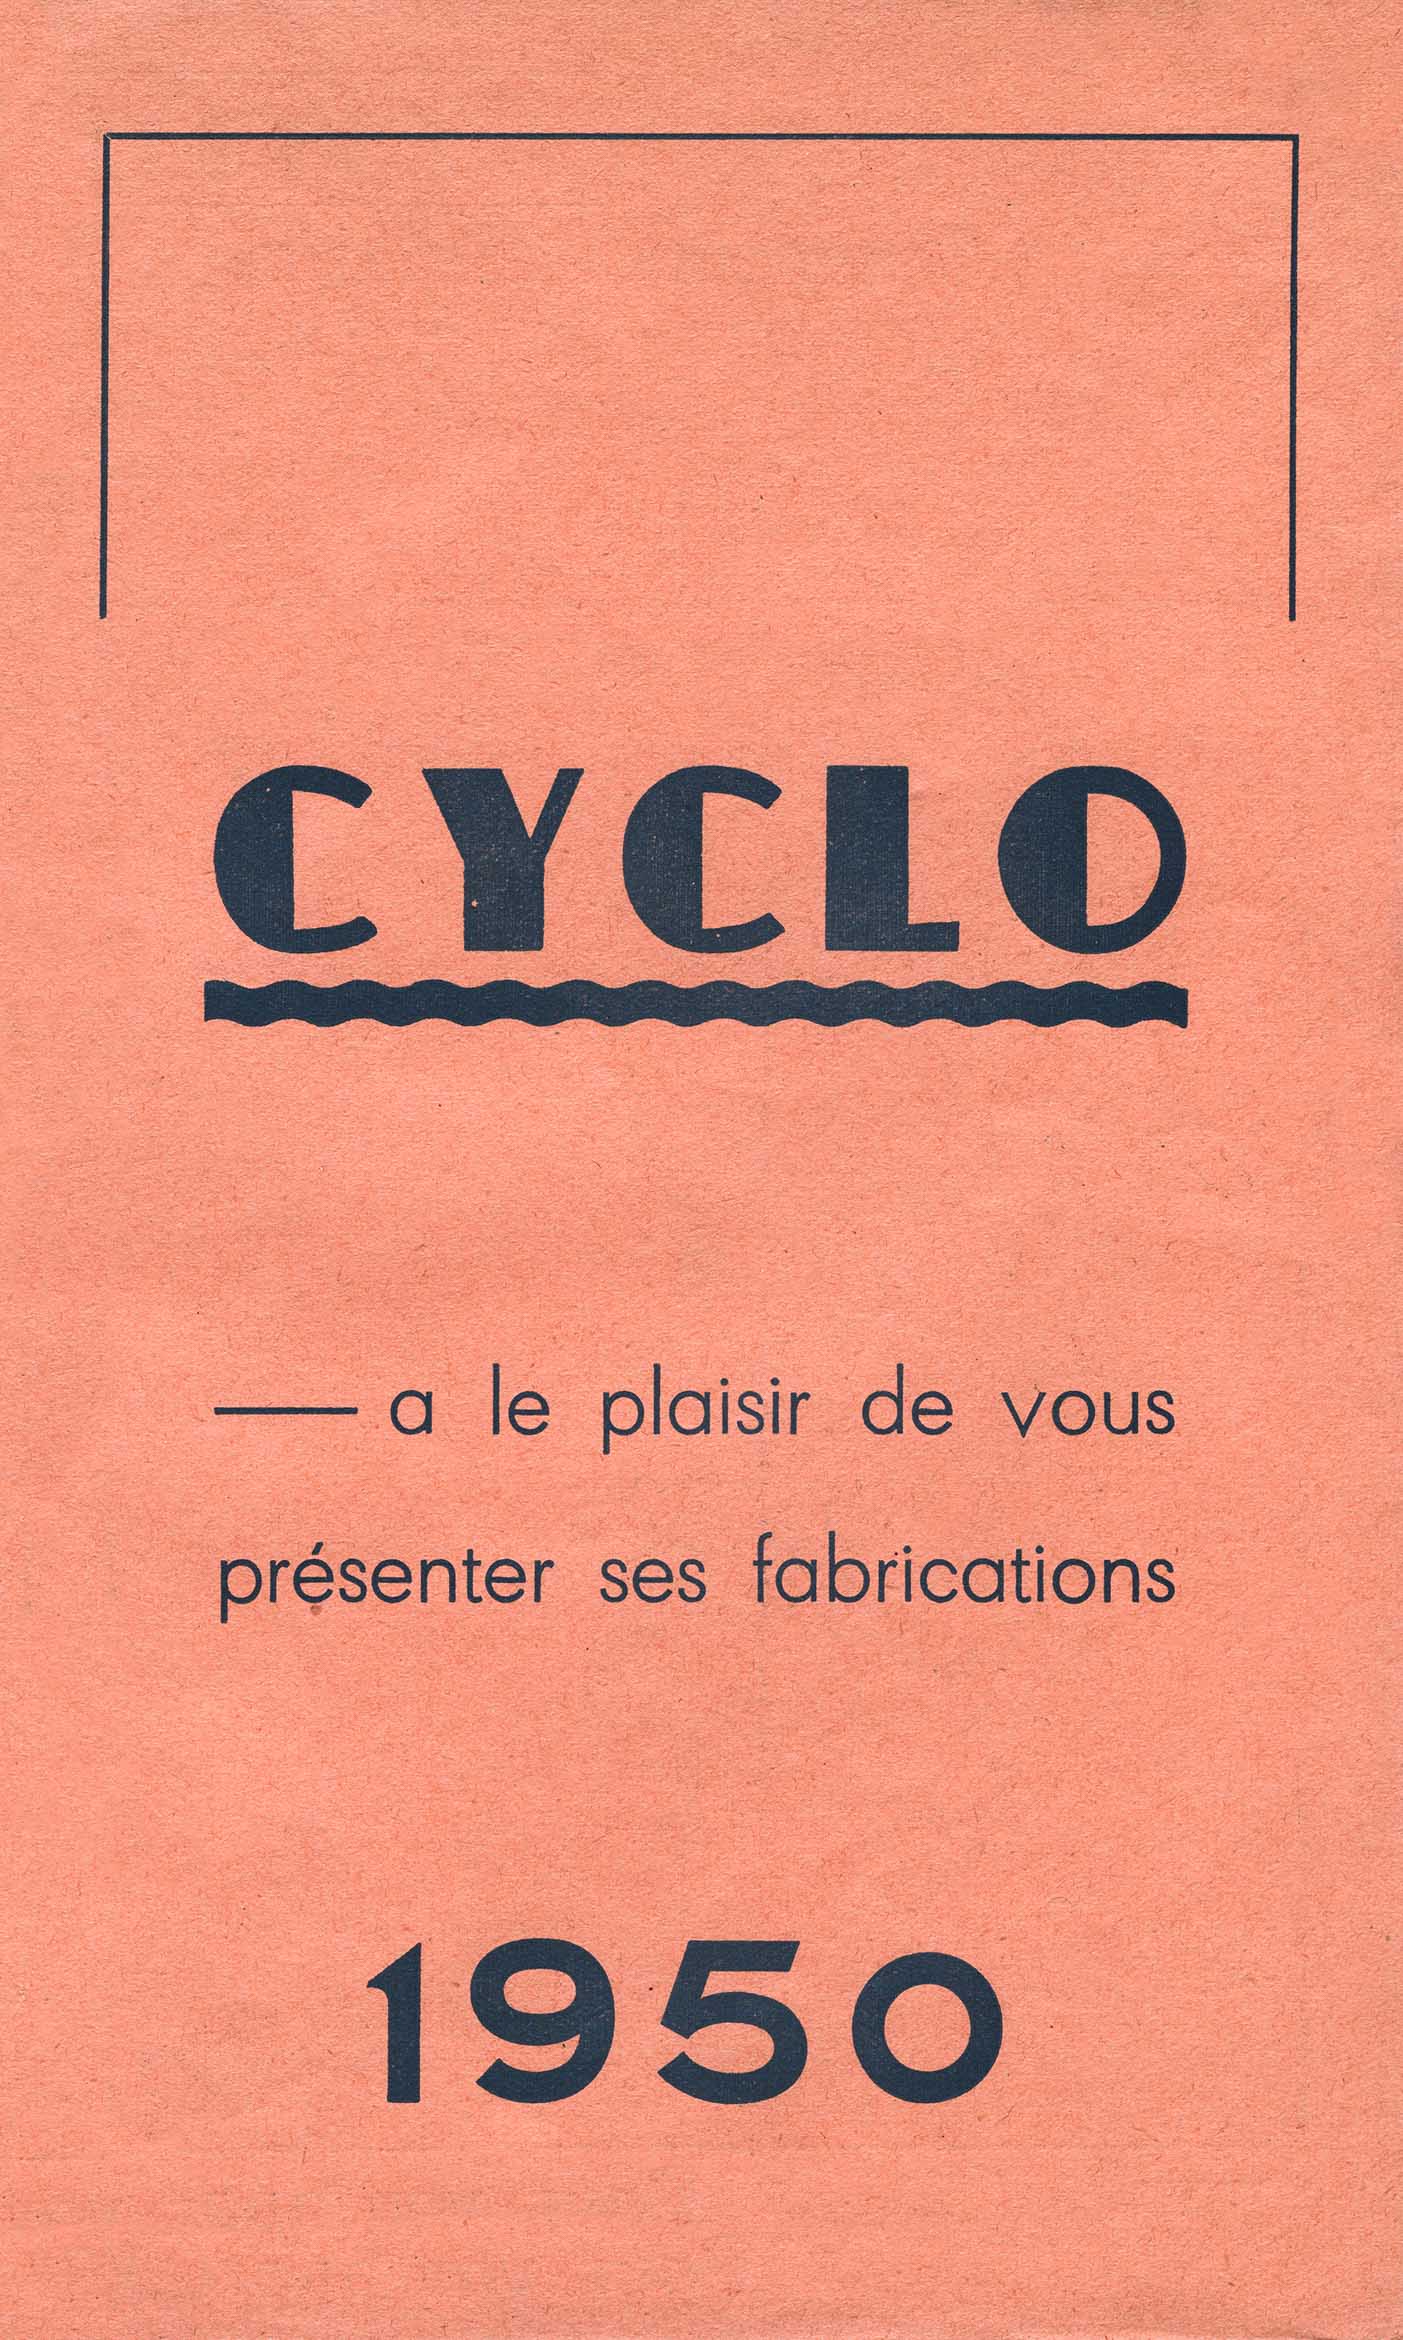 Cyclo - 1950 scan 01 main image